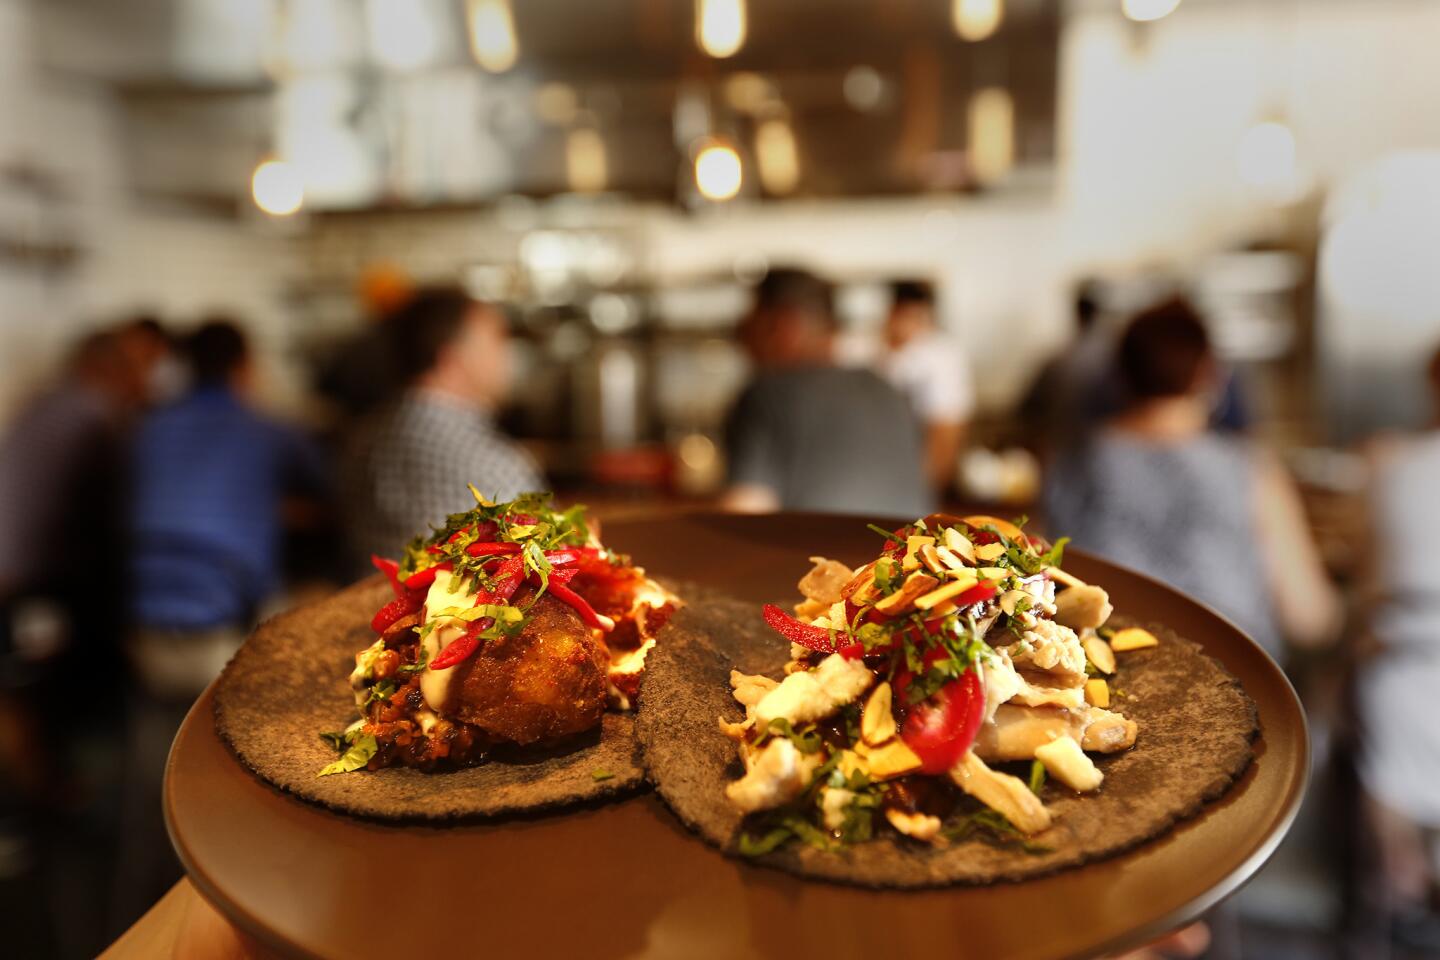 The tacos at Taco Maria are the stars, including Jardineros, left, and Mole de Pollo.